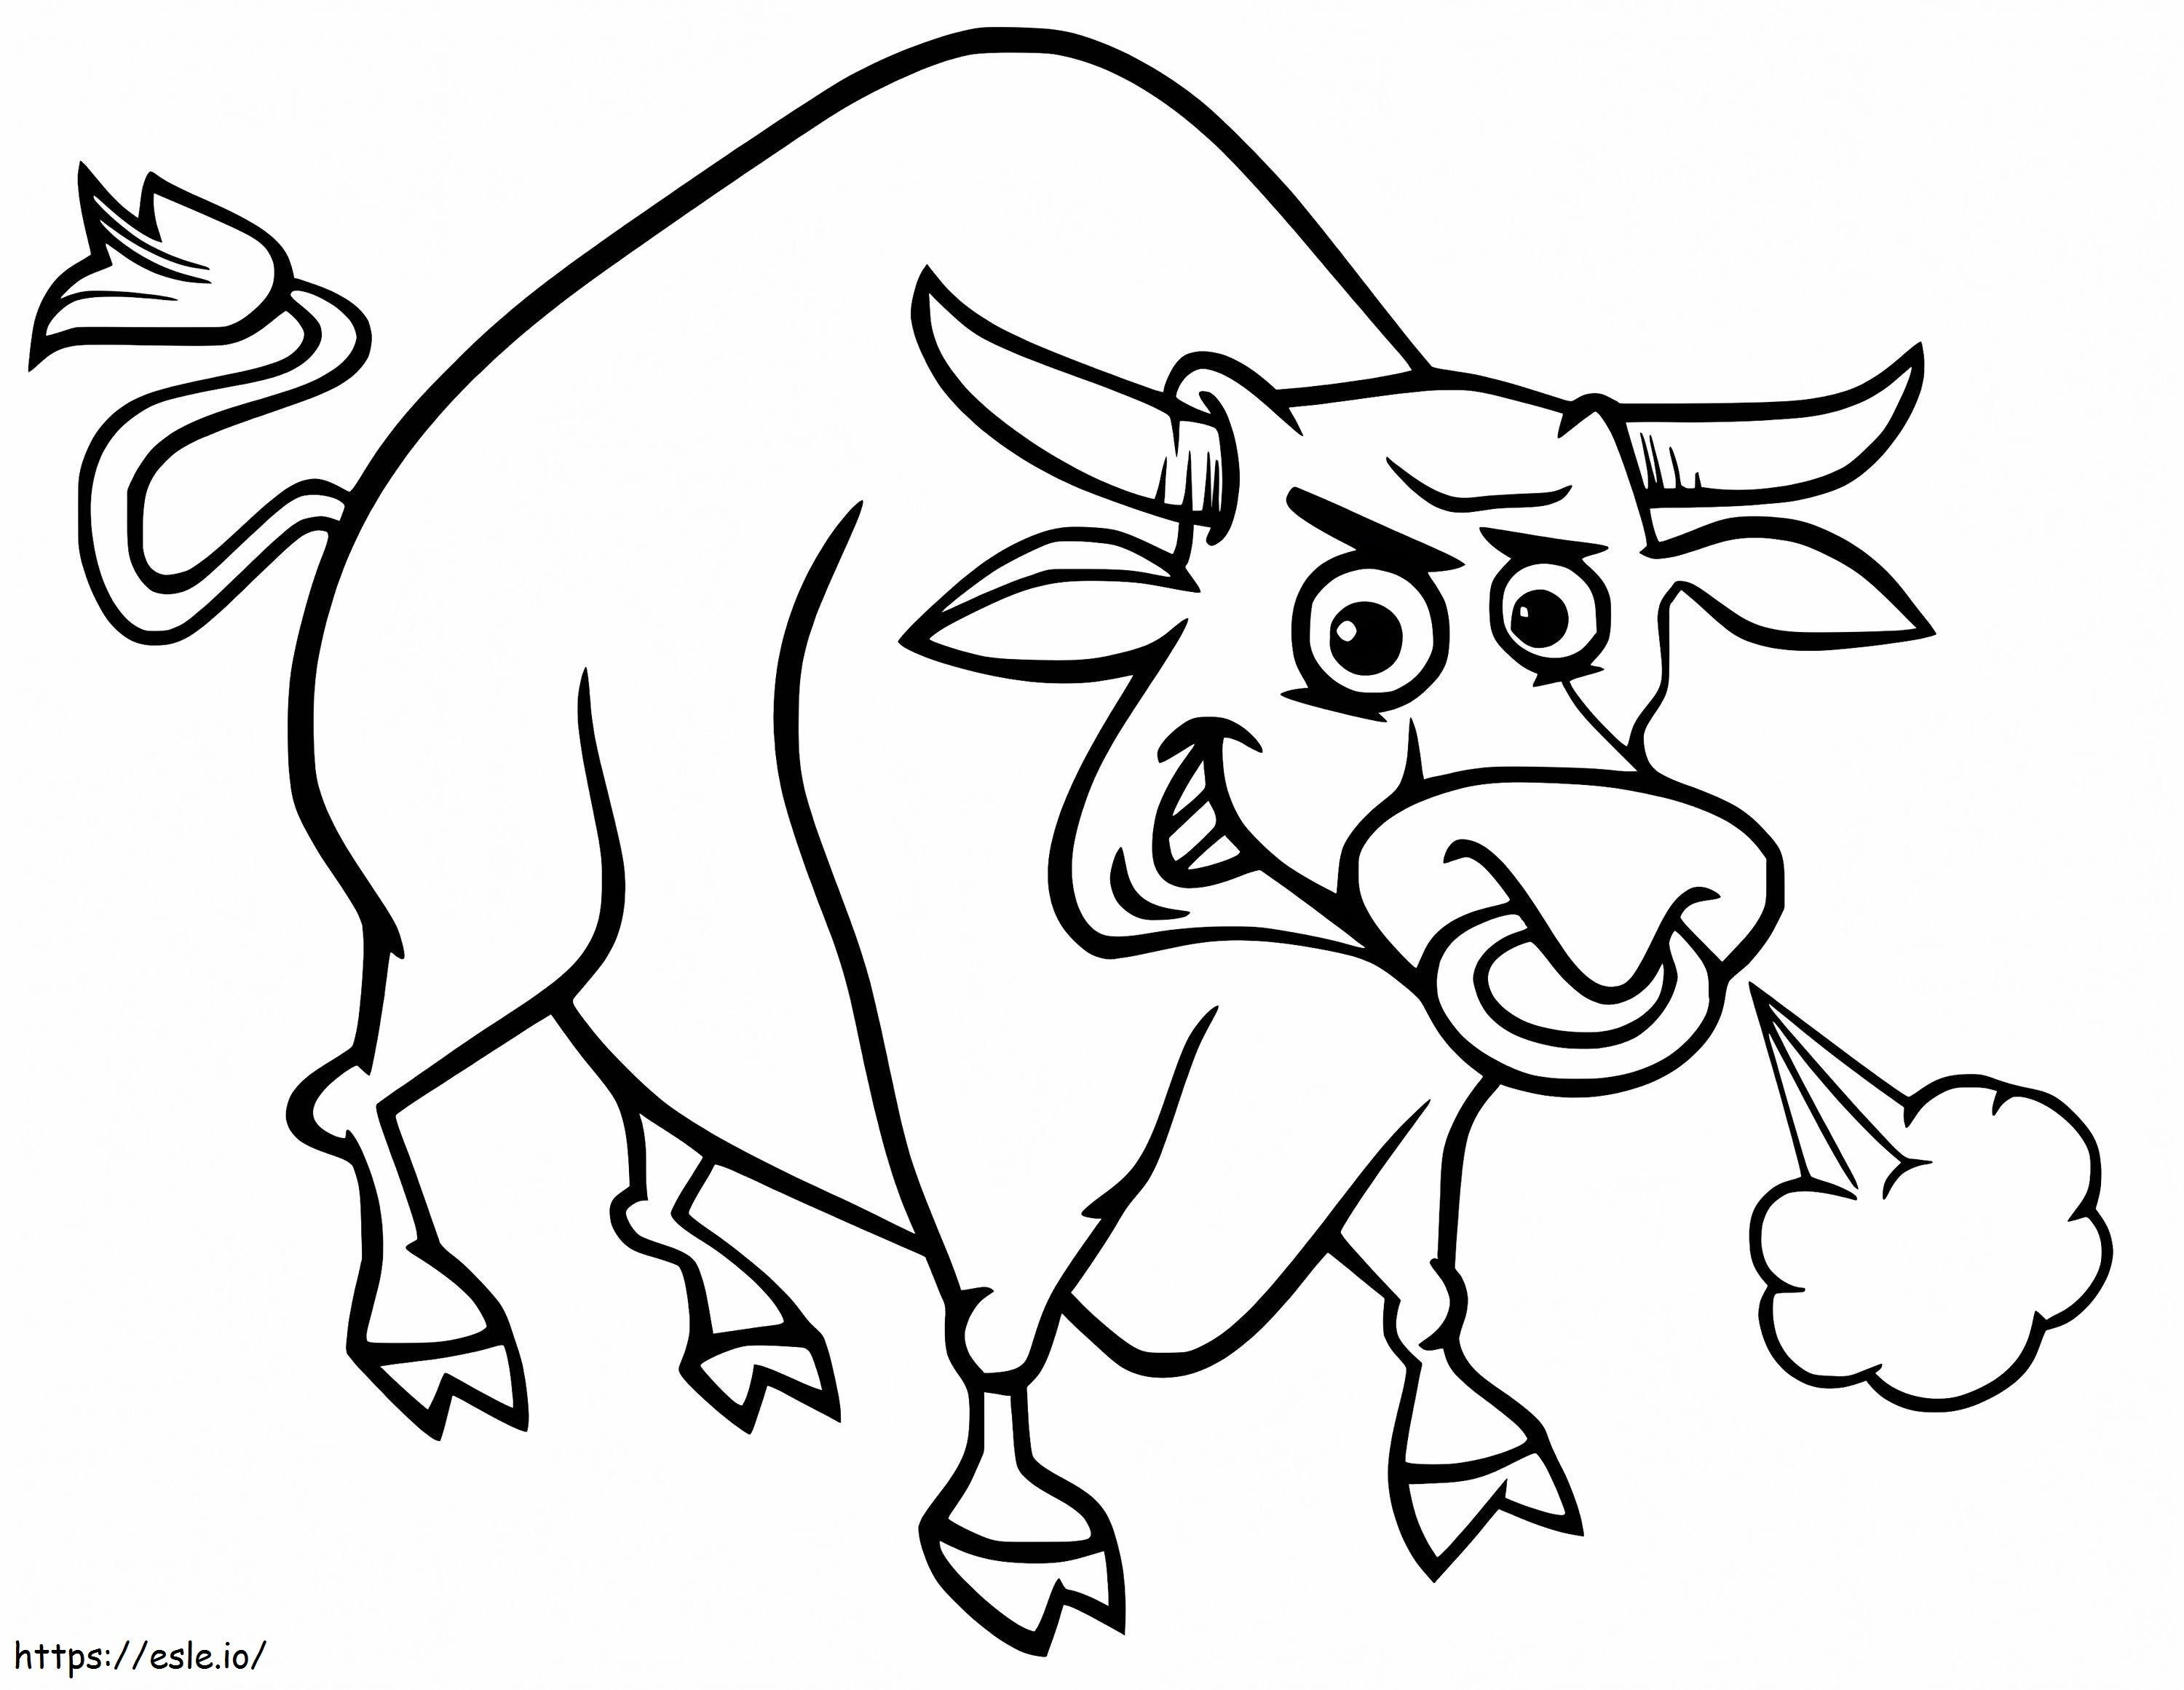 Bull Cartoon coloring page